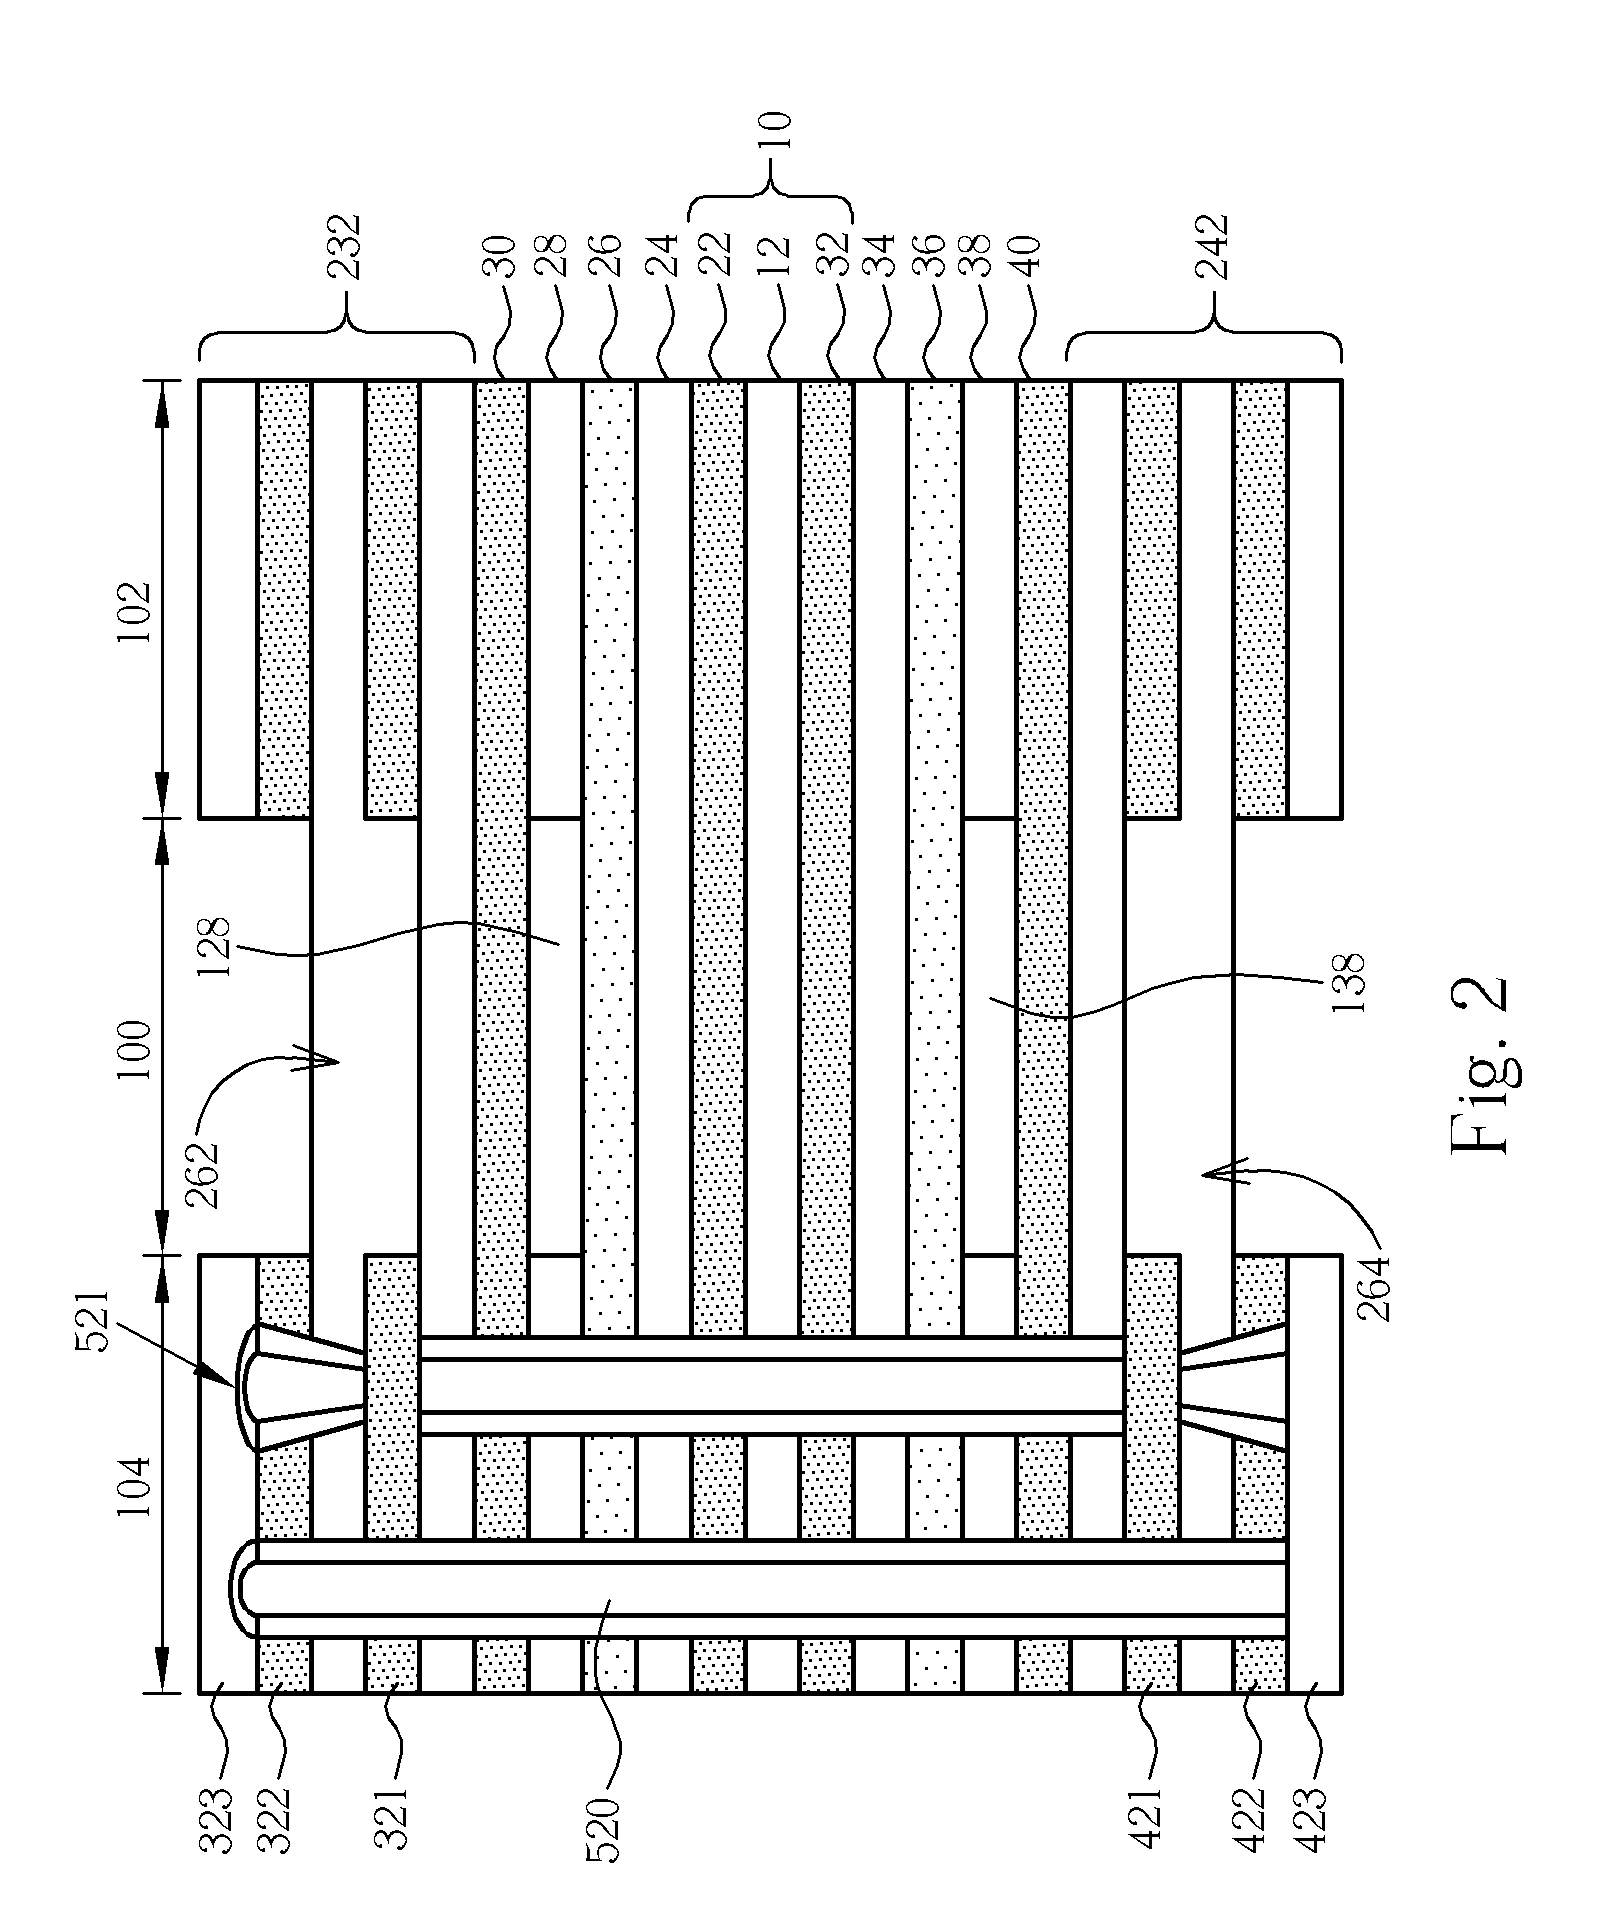 Method for manufacturing a rigid-flex circuit board